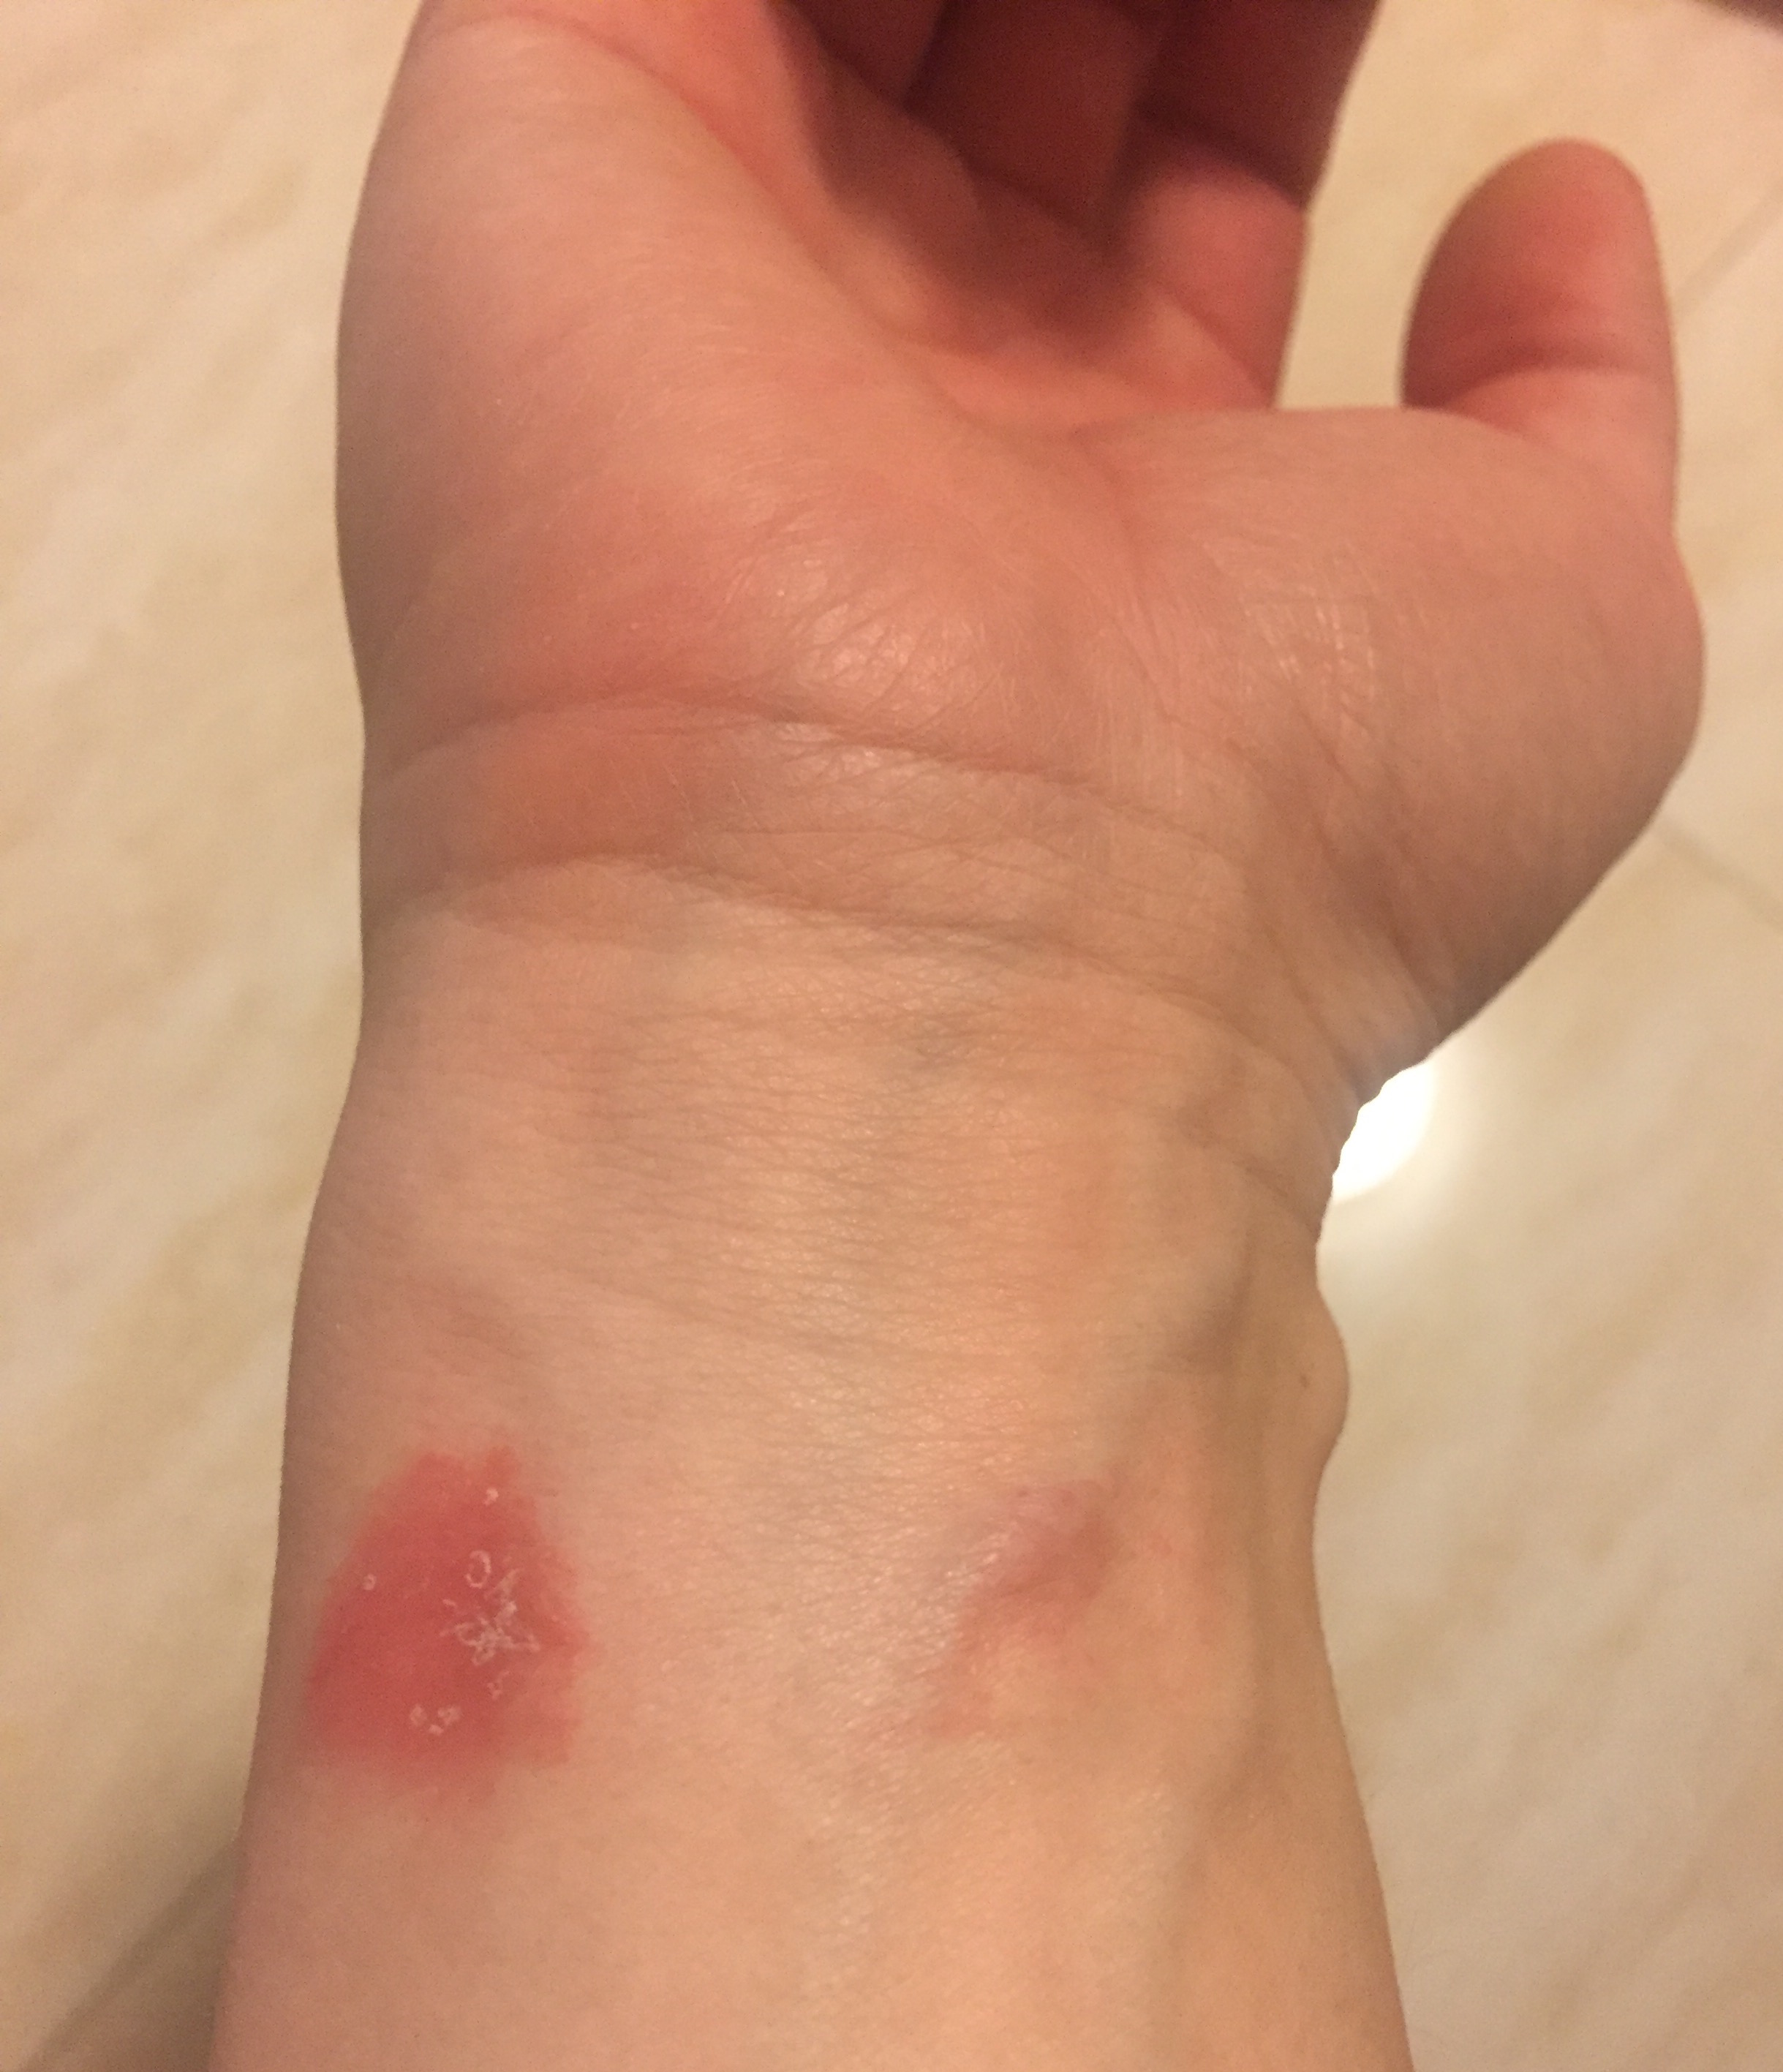 Sport Watch Band Caused Rash On My Wrist Apple Community